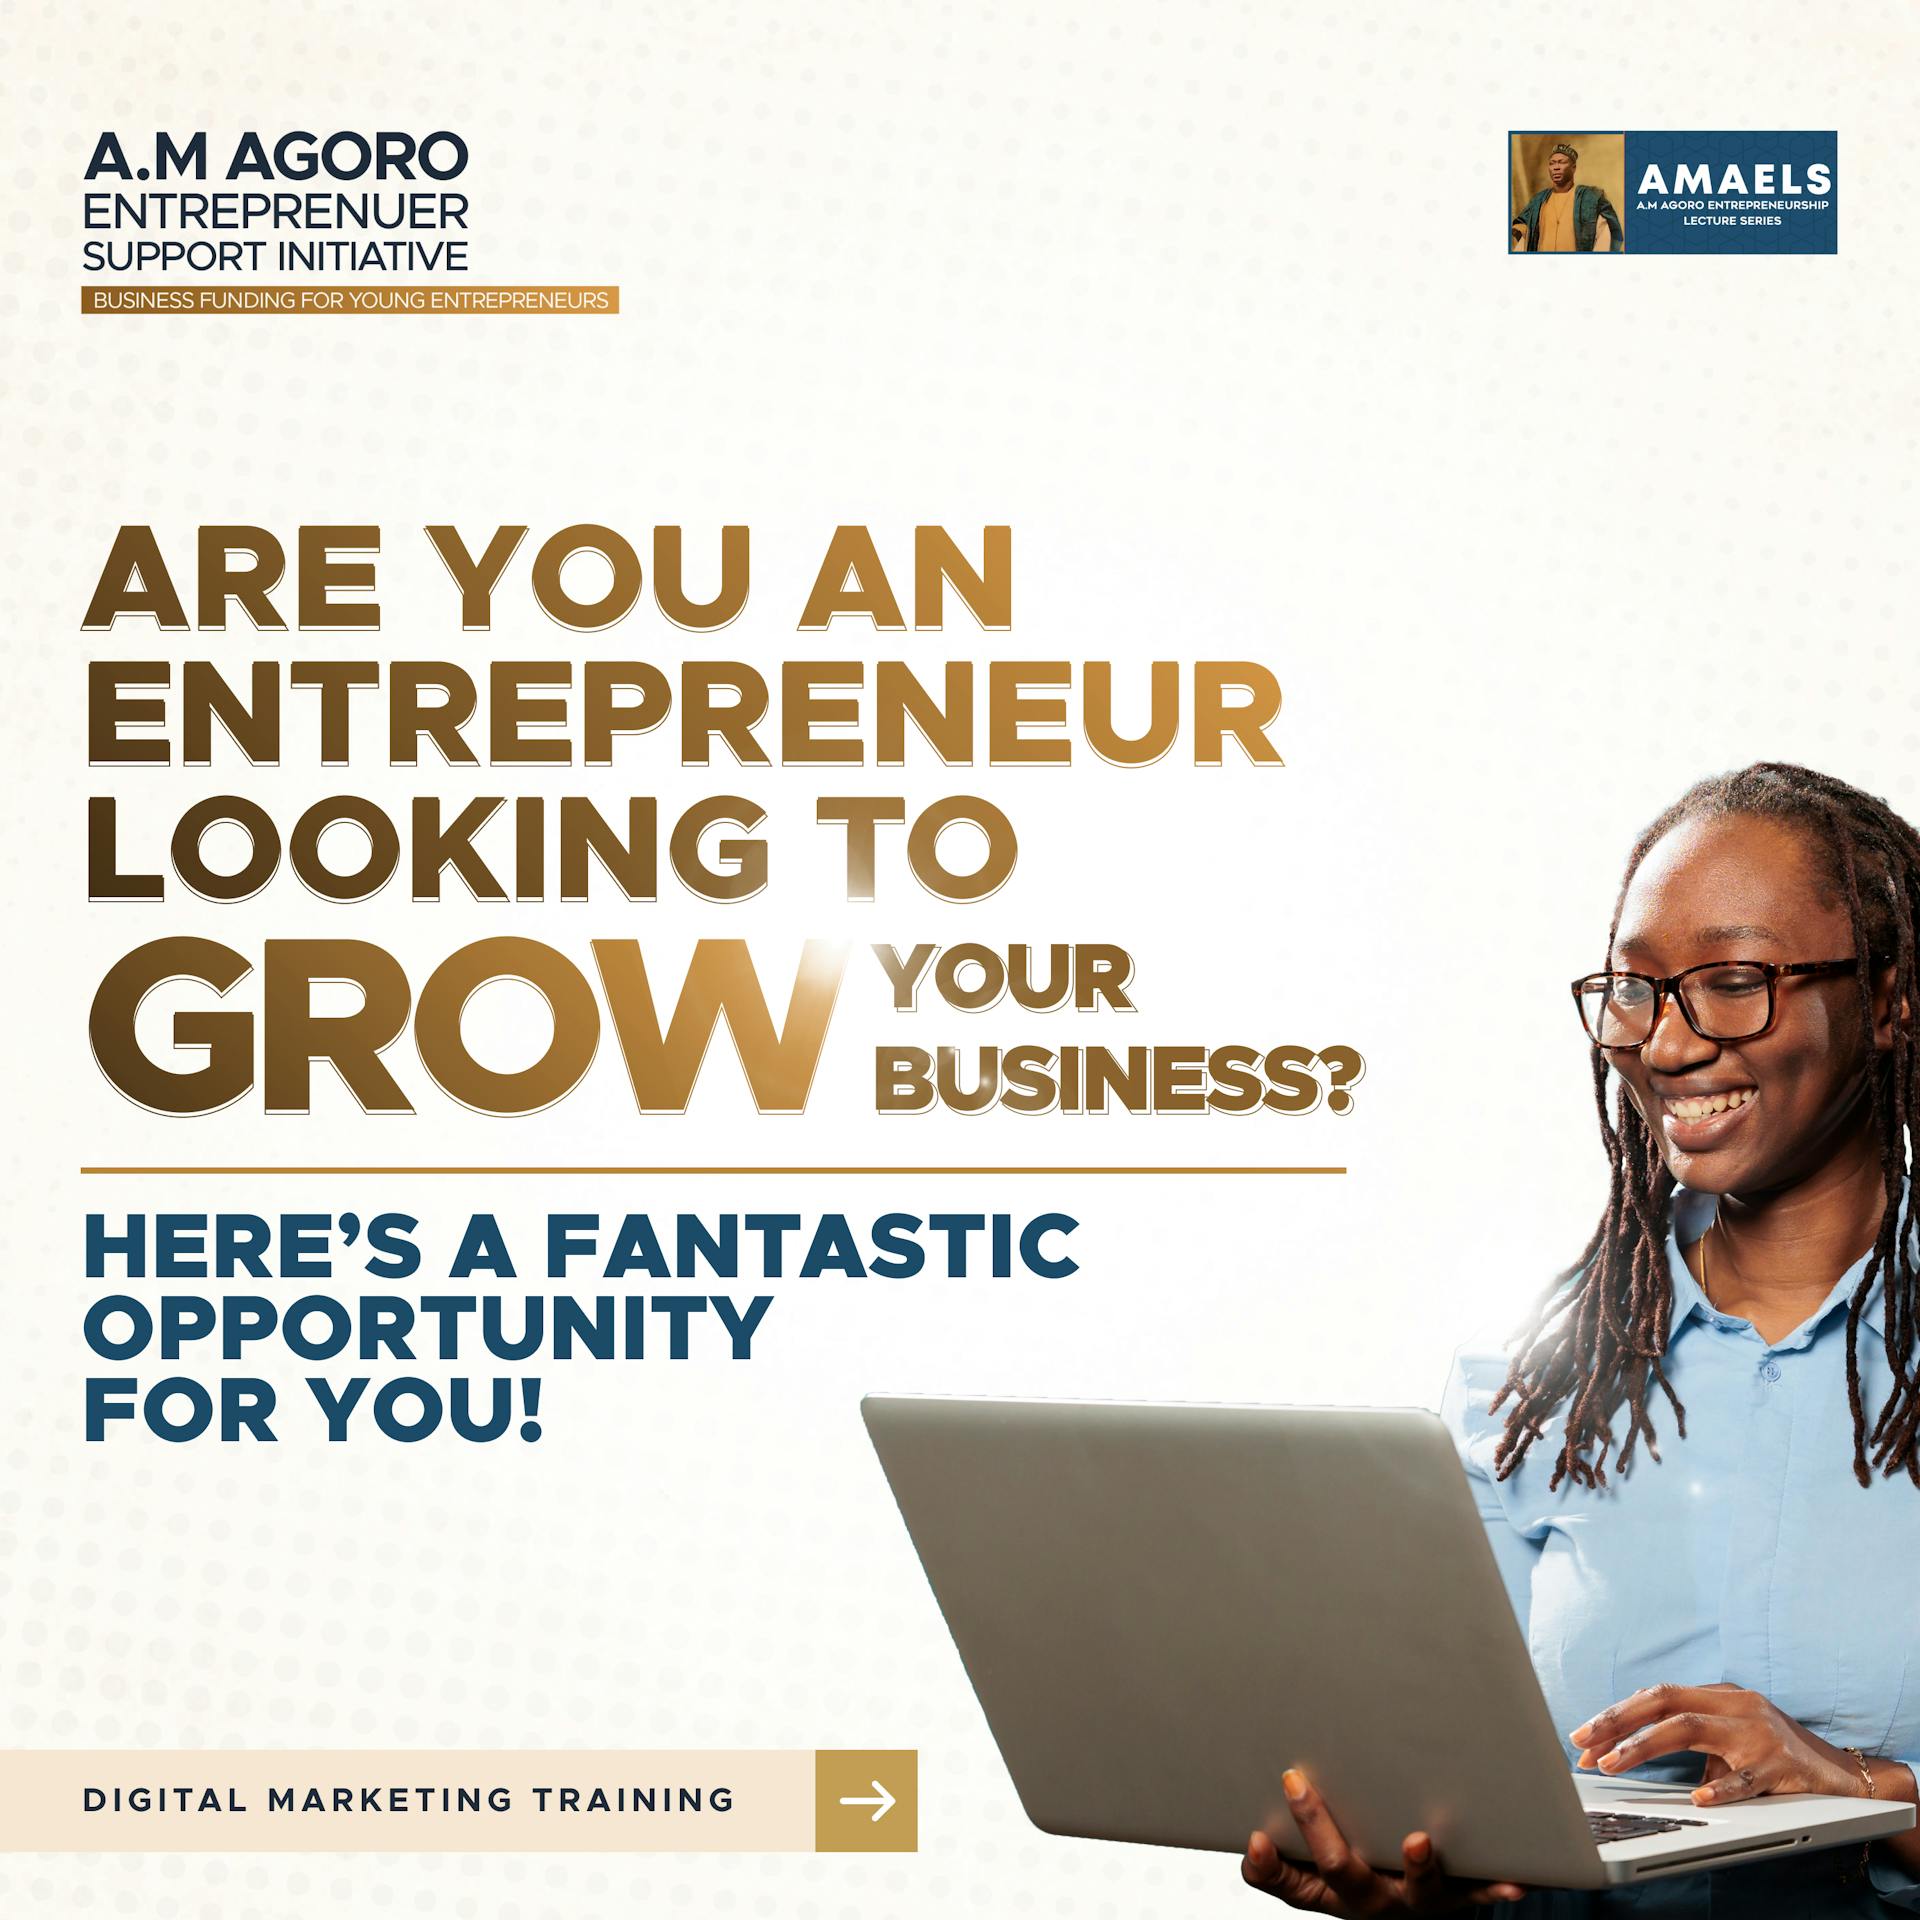 AM Agoro Entrepreneurship Support Initiative - Digital Marketing